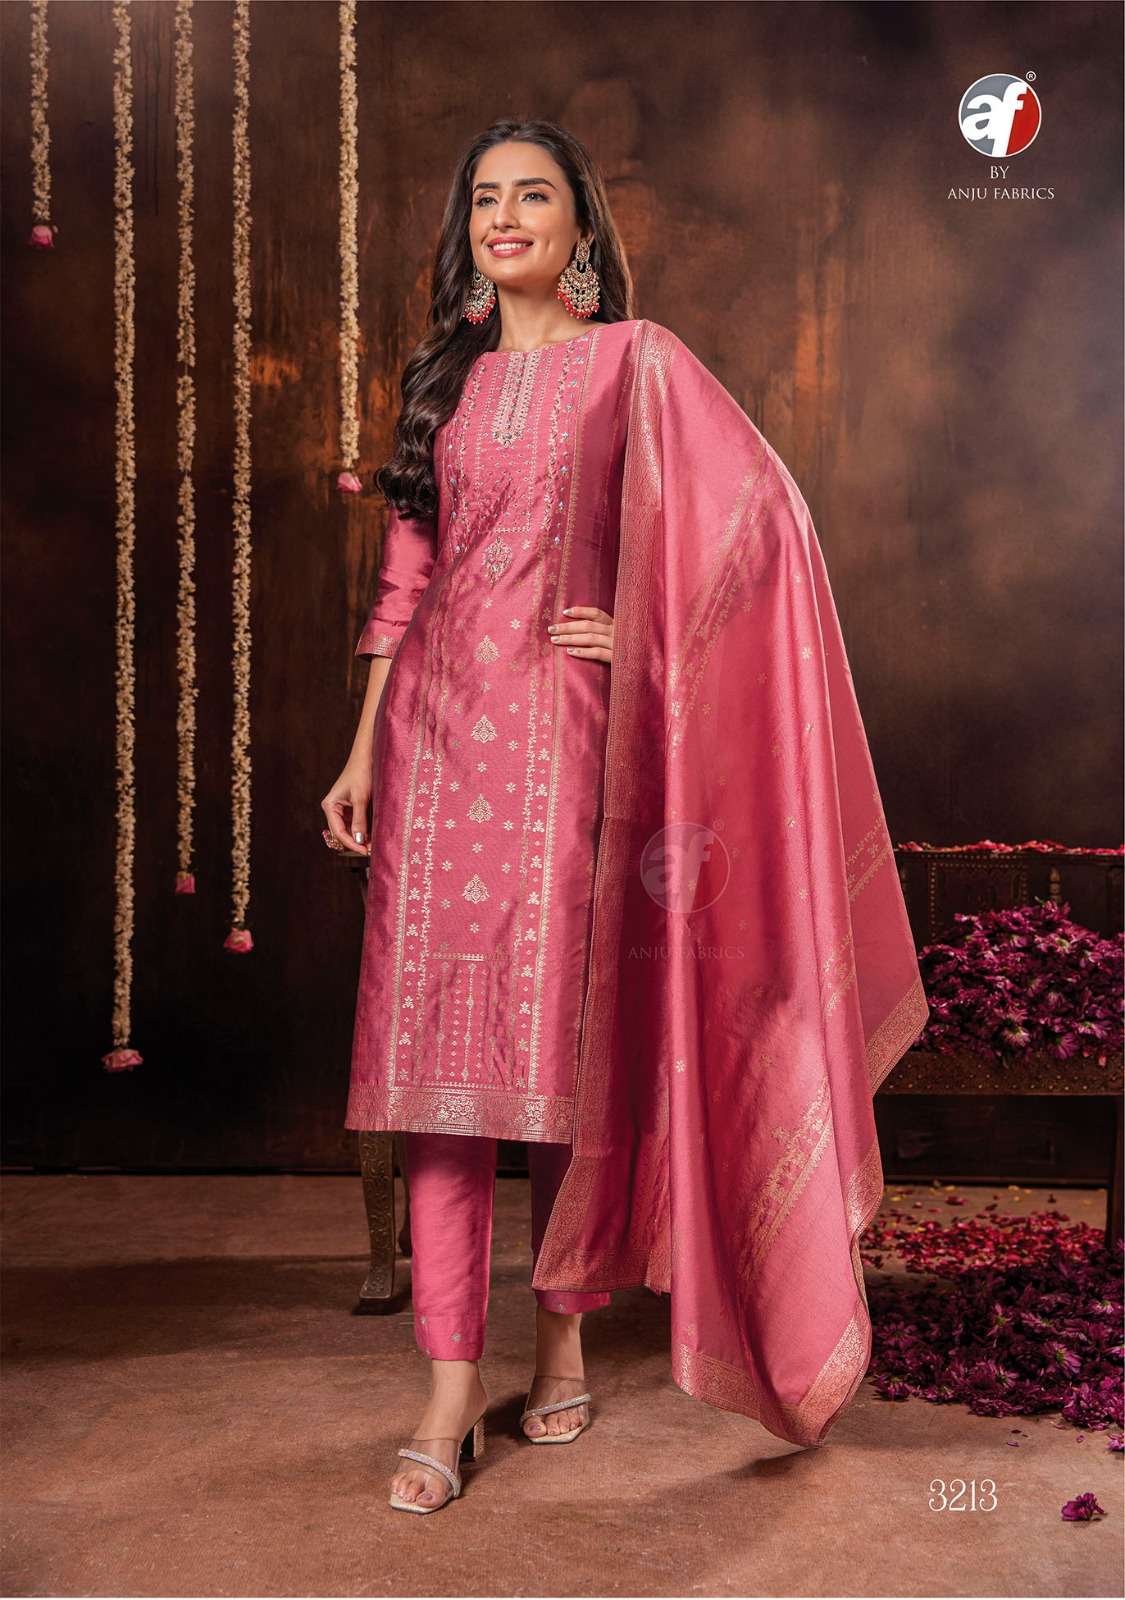 anju fabrics silk affair vol-2 3211-3216 series festive collection wholesale price supplier surat